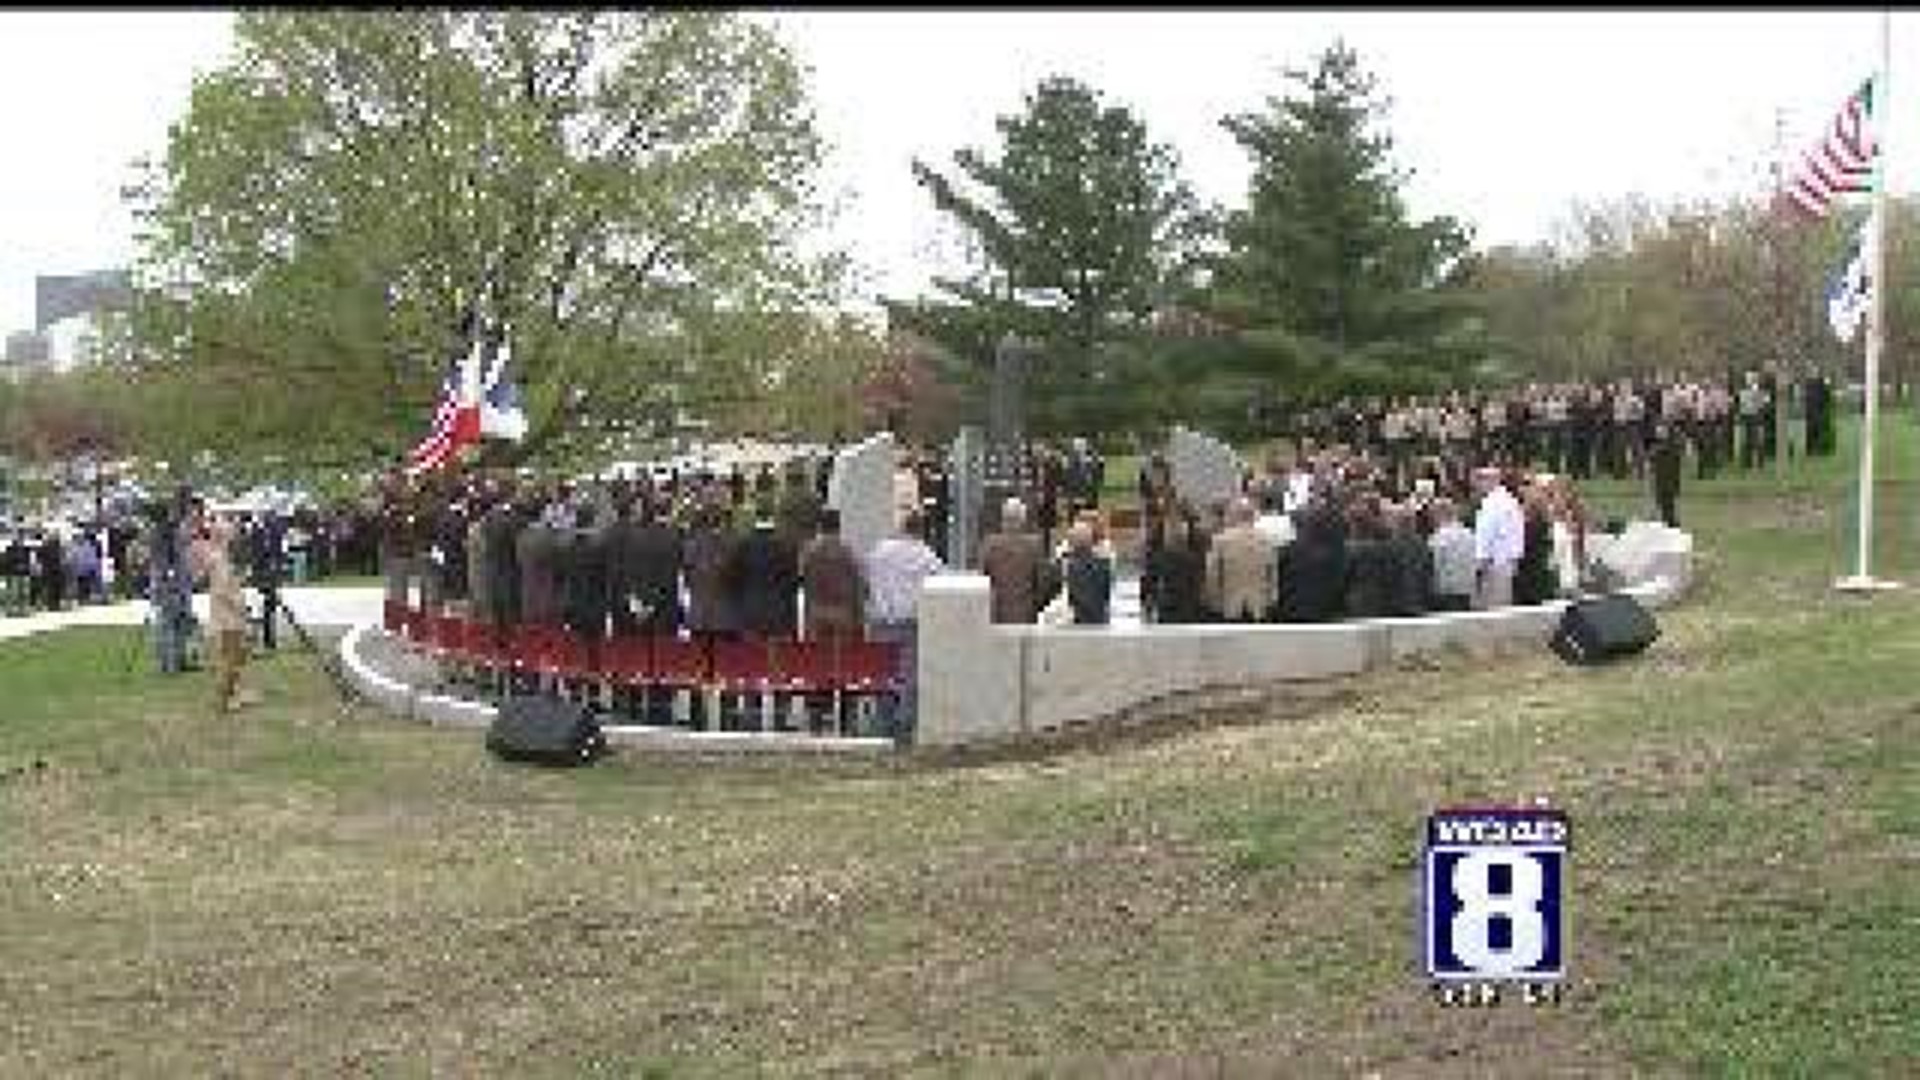 Memorial honors fallen police officers